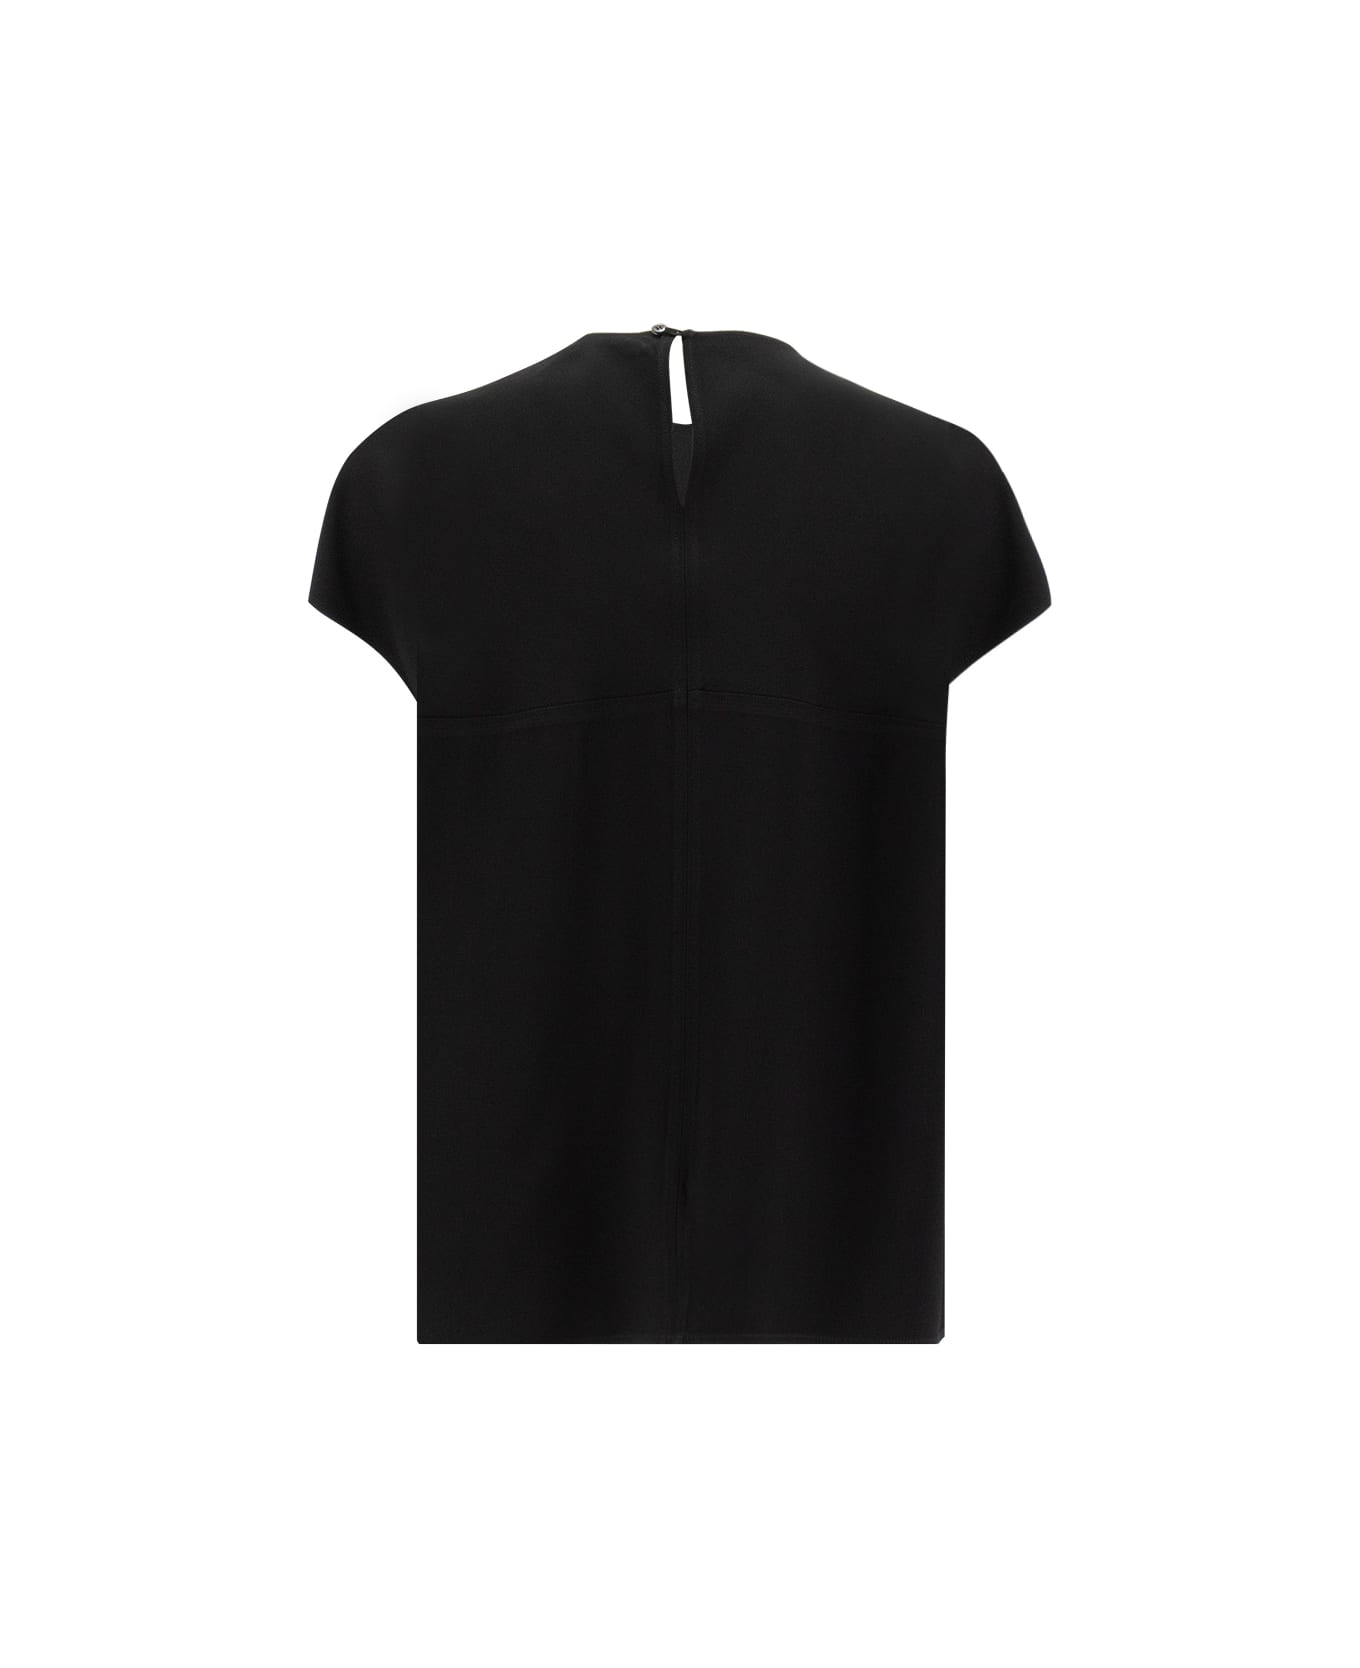 Aspesi Top - BLACK Tシャツ